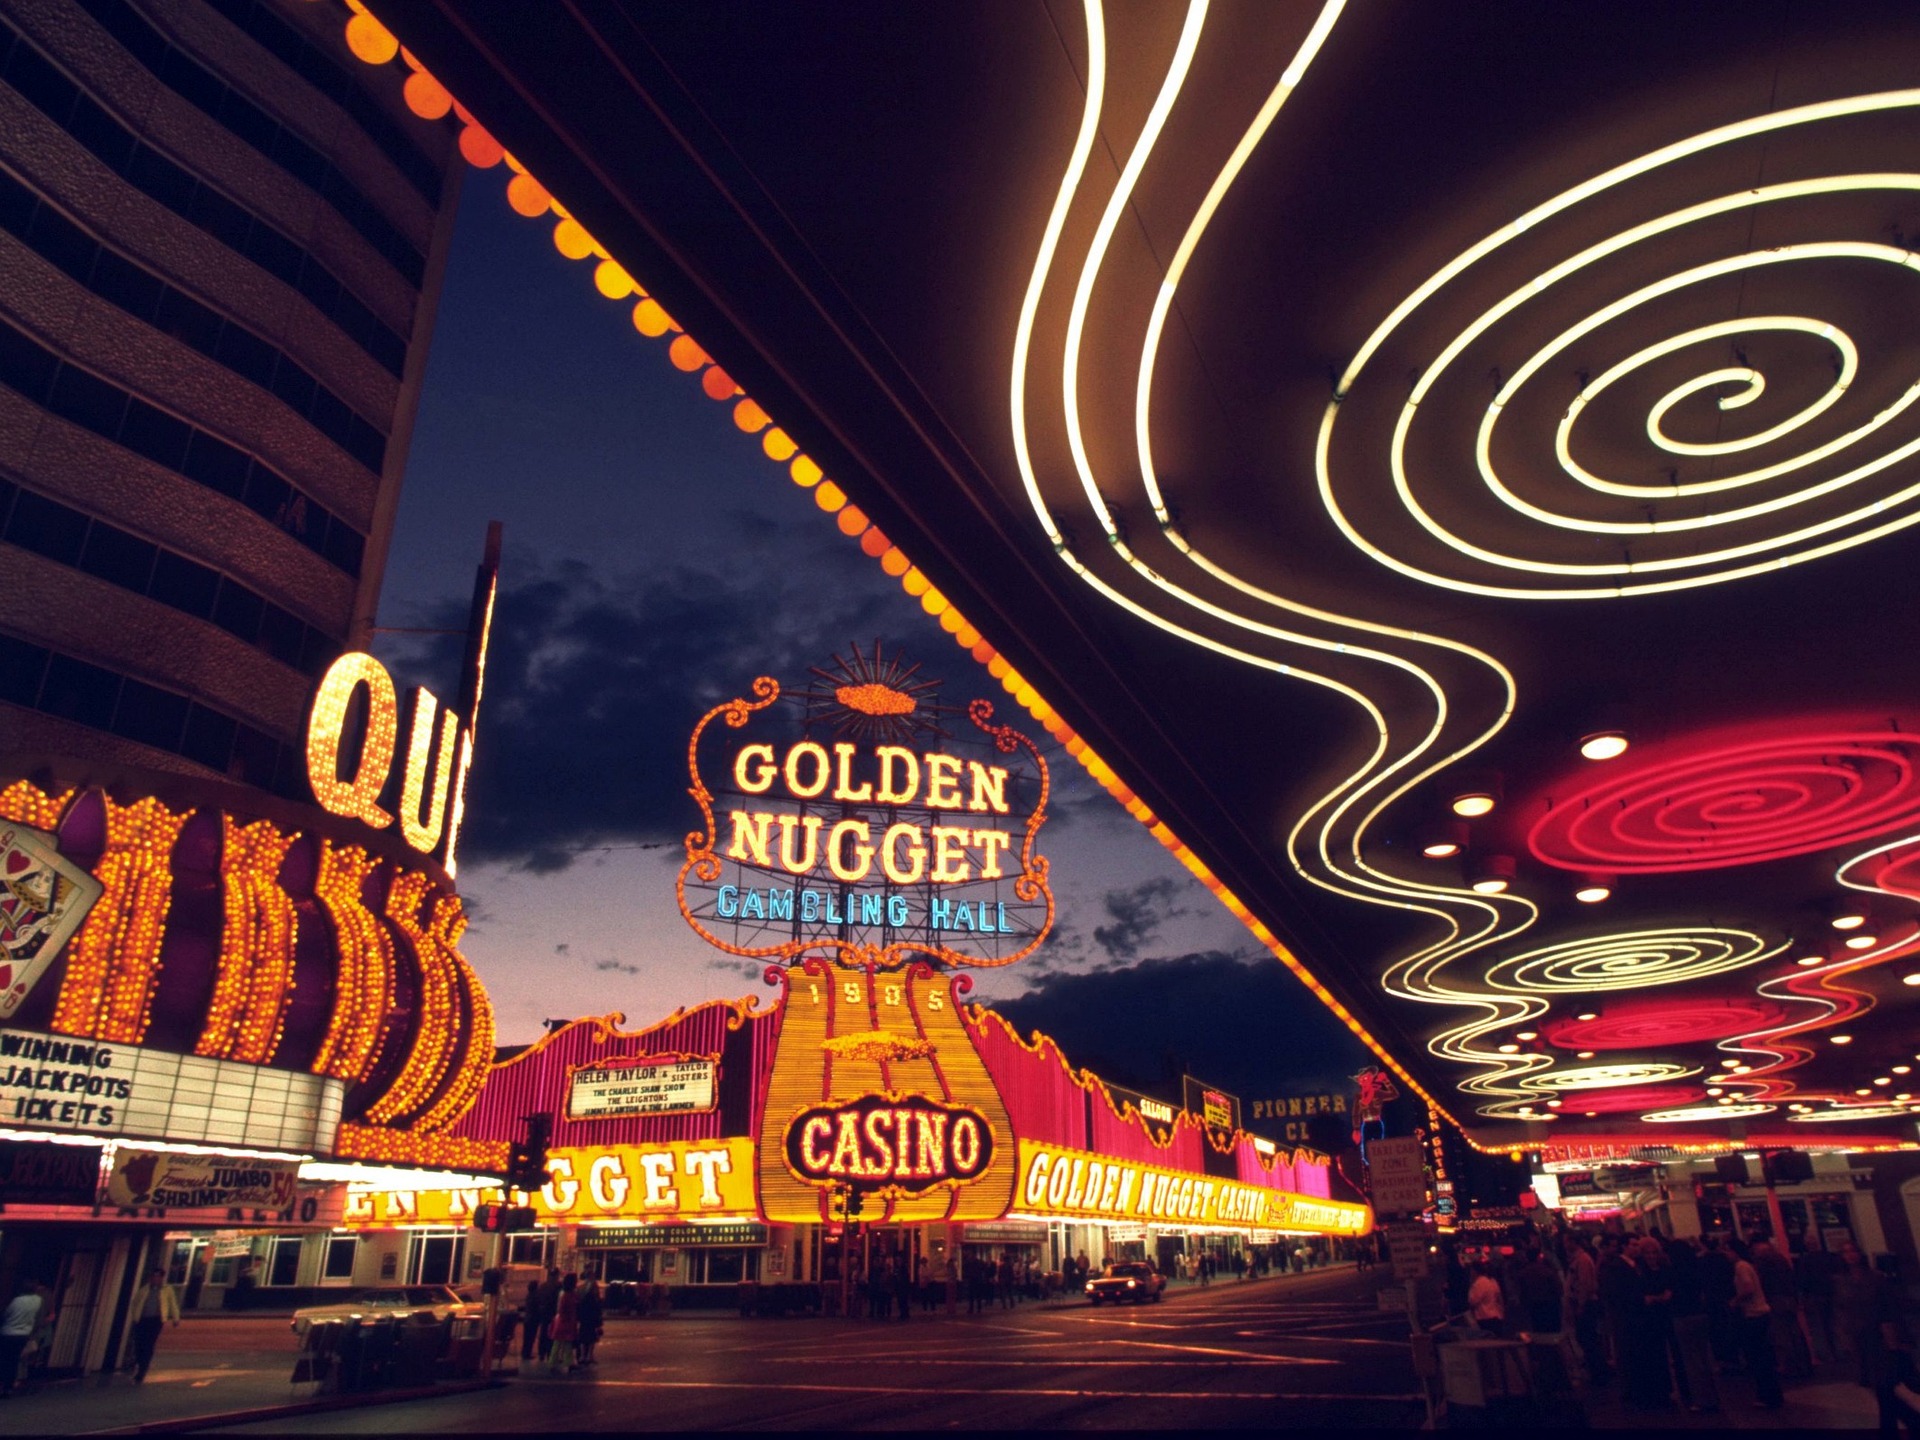 Golden nugget casino at night